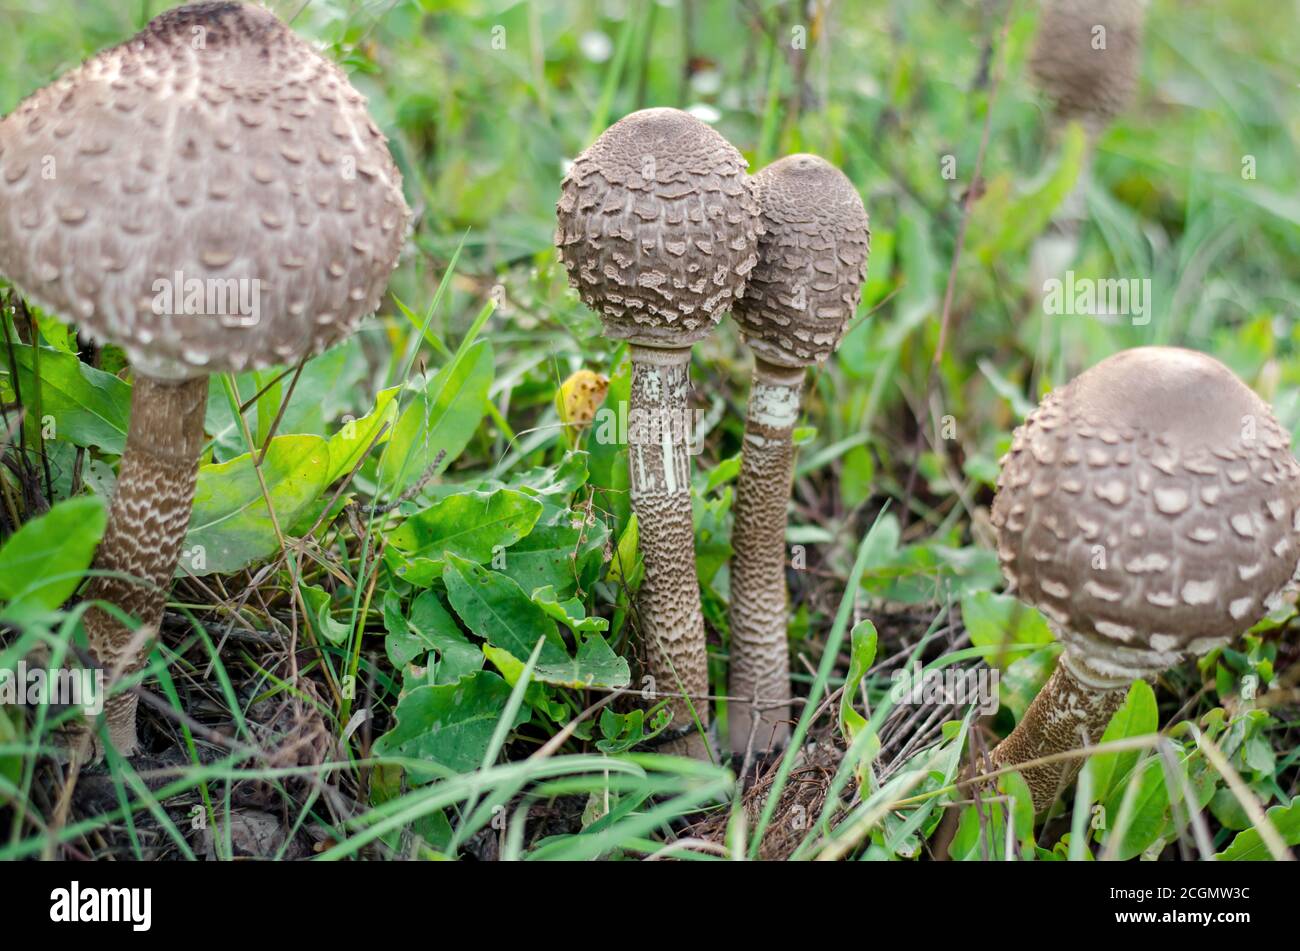 Macrolepiota procera. Edible mushrooms umbrellas growing in old garden. Ukraine. Stock Photo